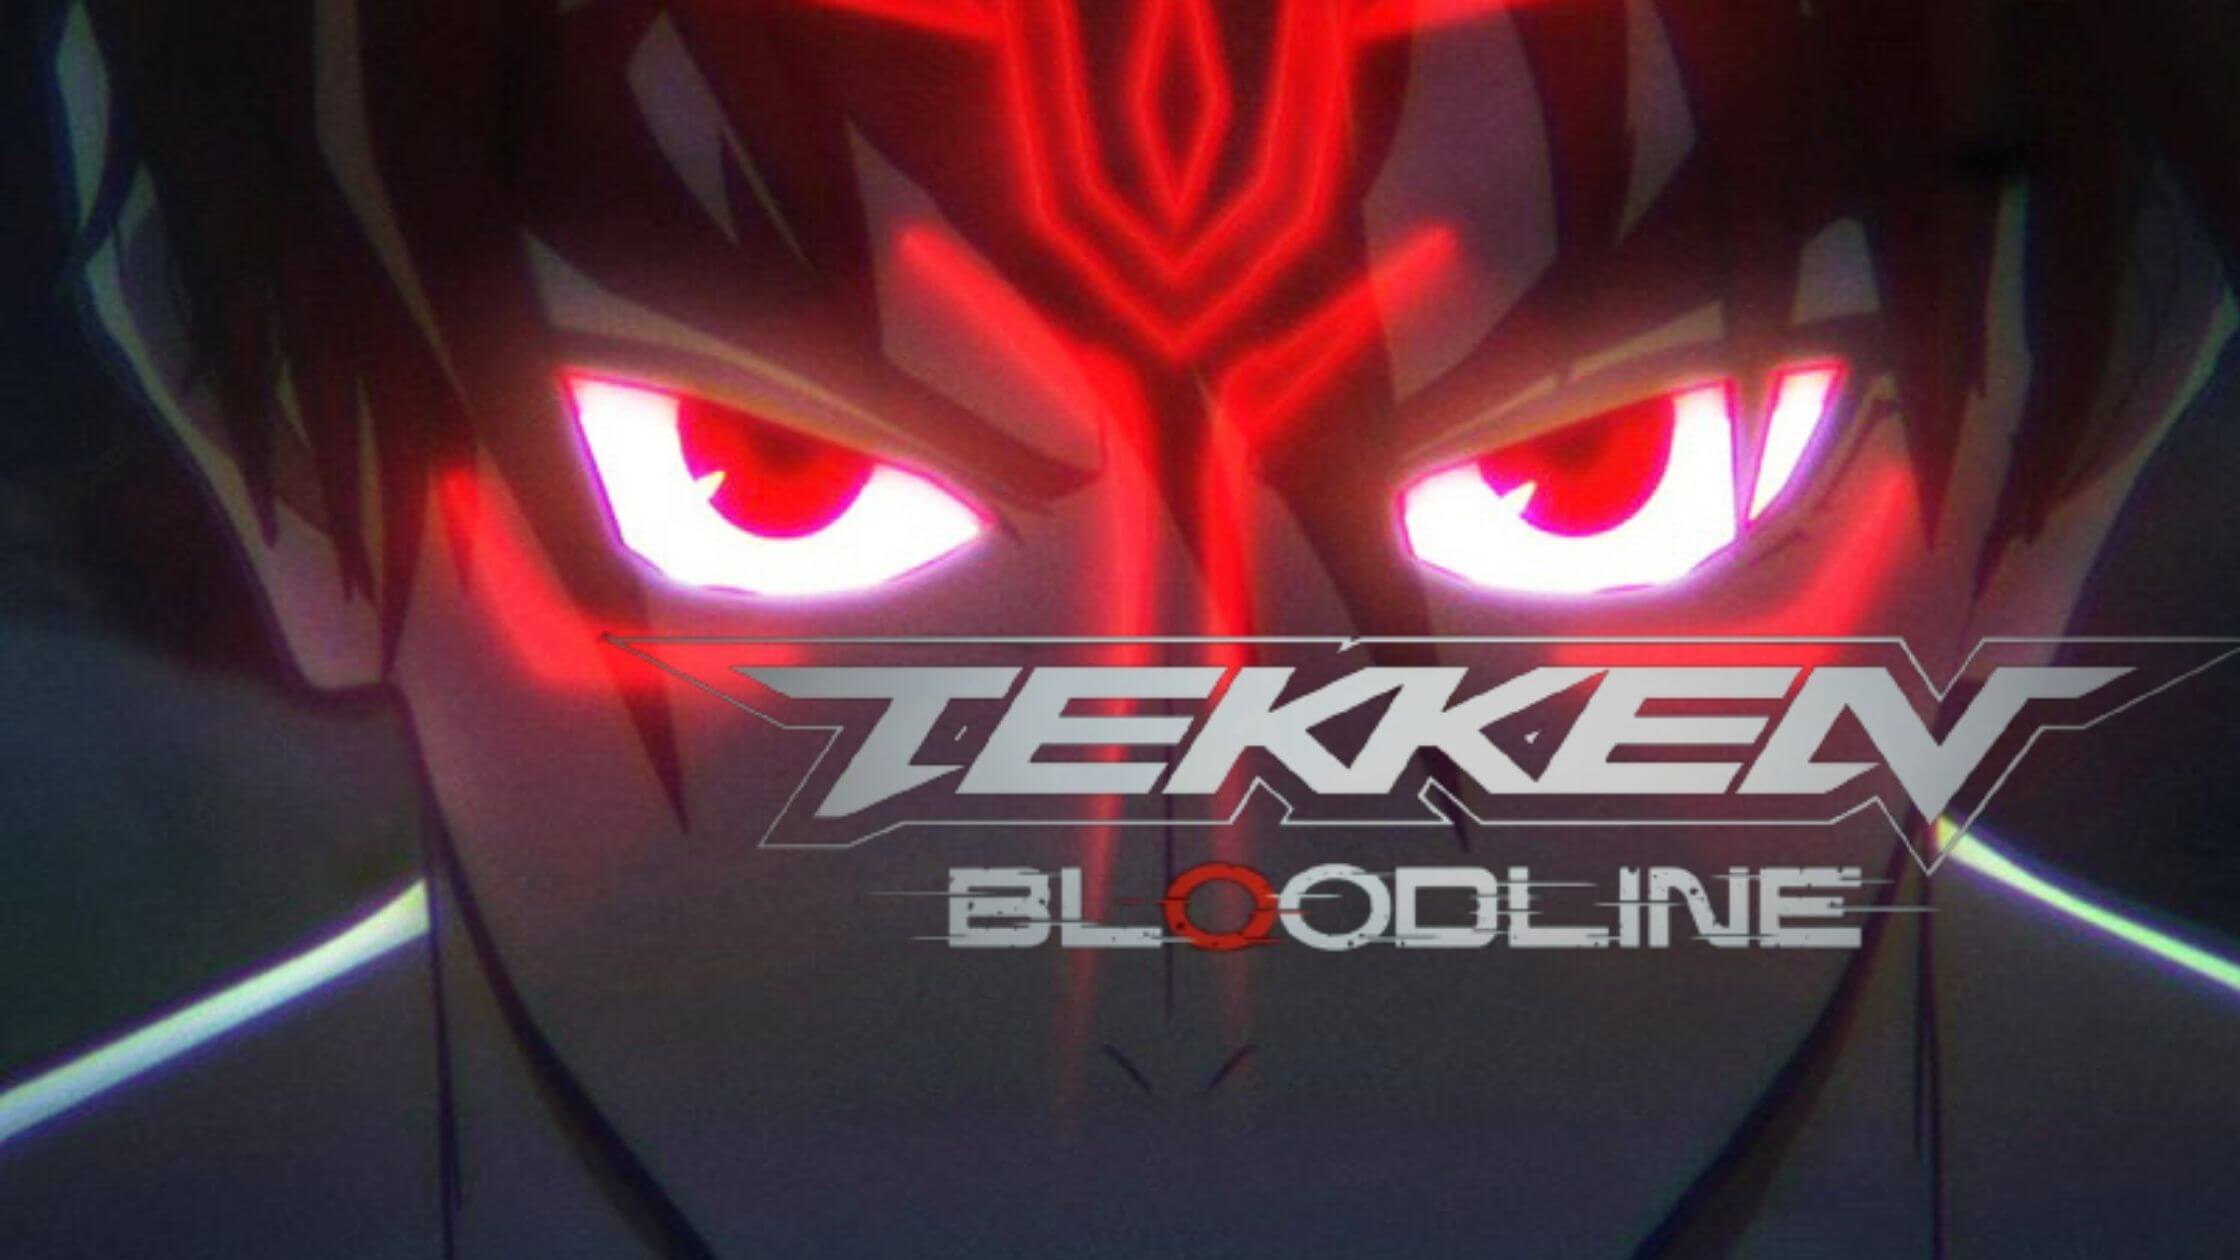 Its-Coming-TEKKEN-BLOODLINE-Anime-To-Netflix-Featuring-Jin-Kazama-As-The-Lead-1